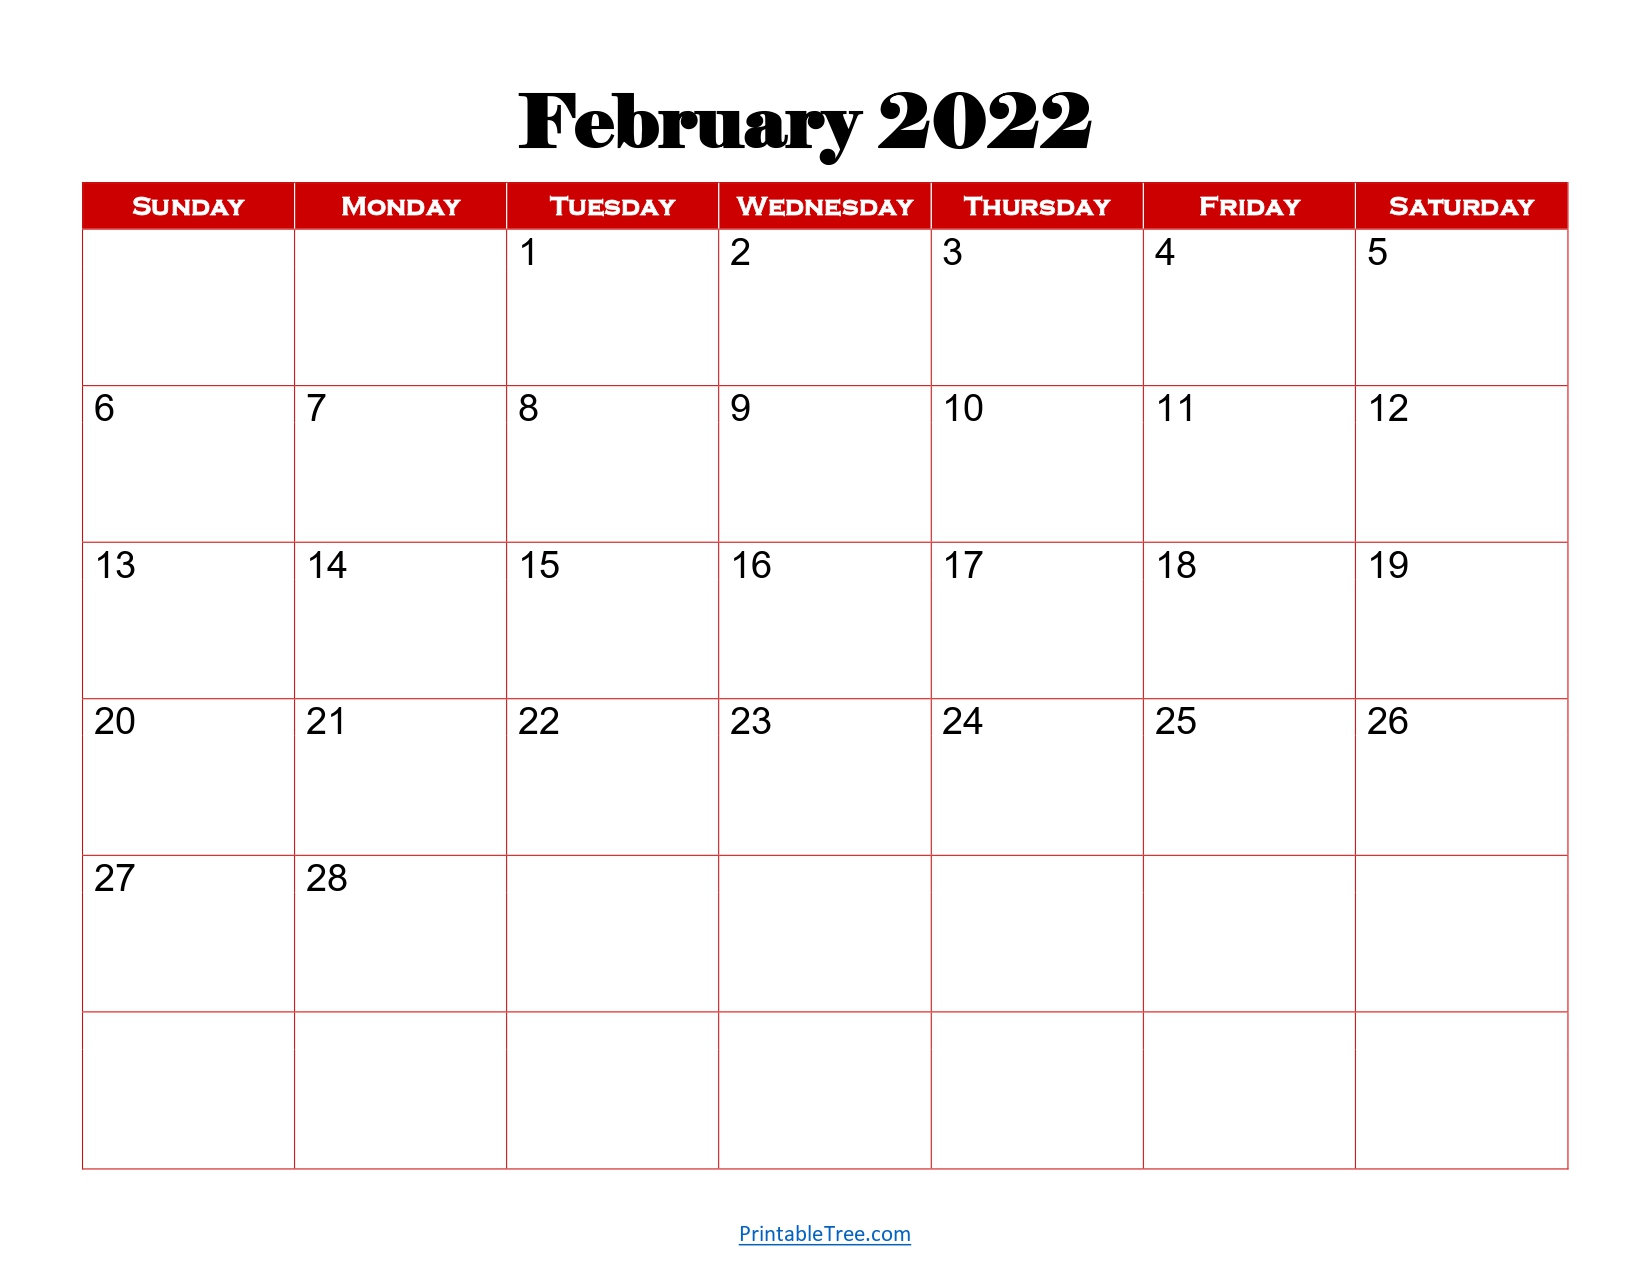 February 2022 Calendar Red Background